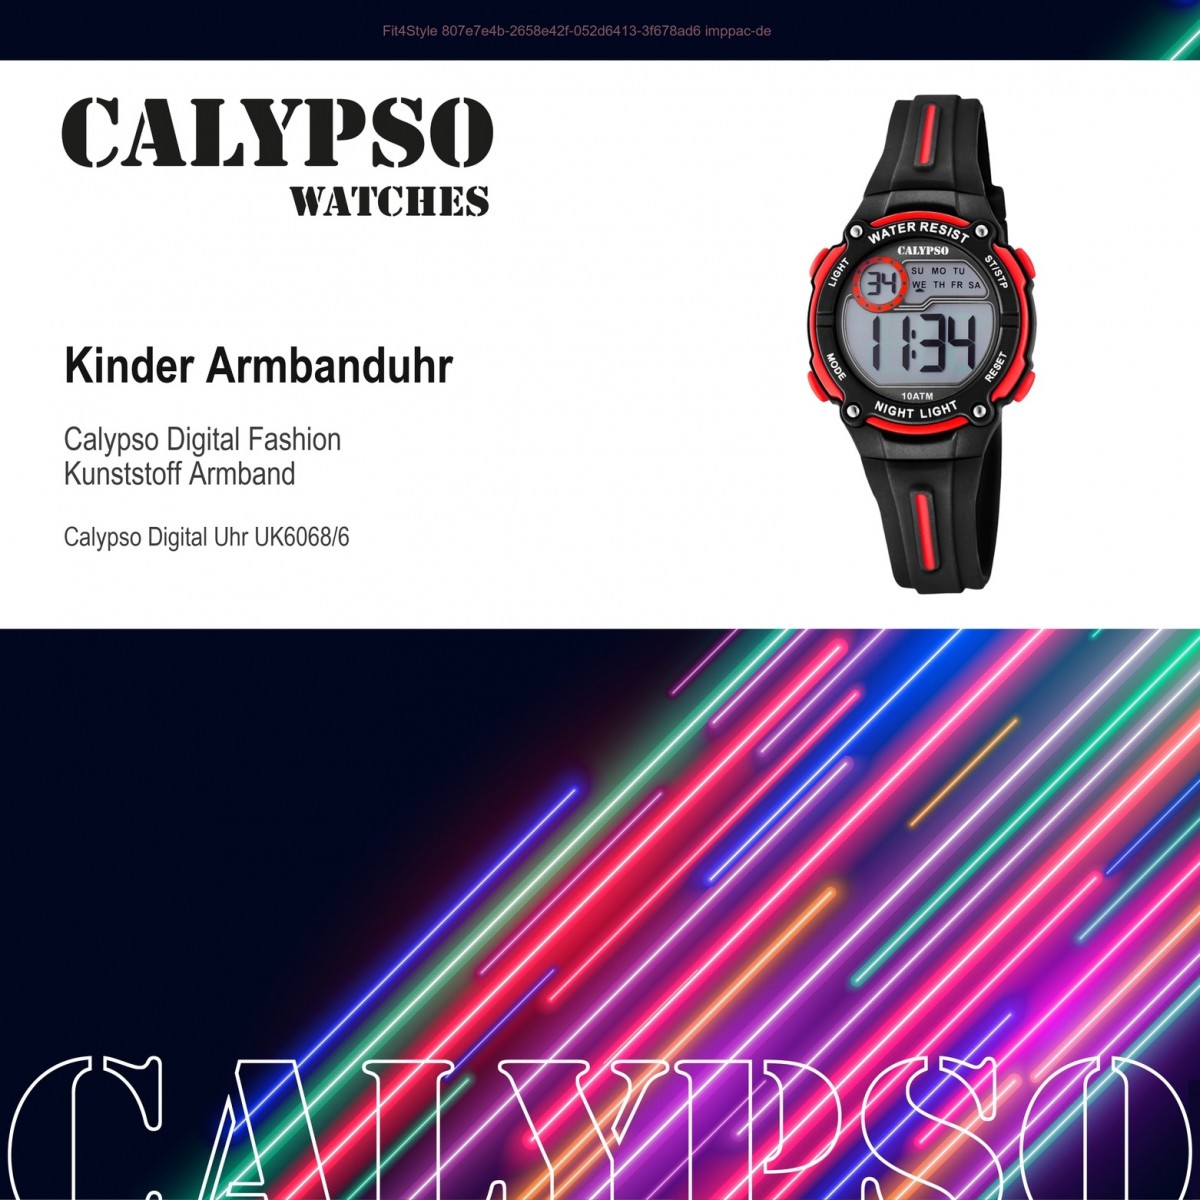 Calypso Kinder Armbanduhr Digital Crush K6068/6 Quarz PU schwarz UK6068/6